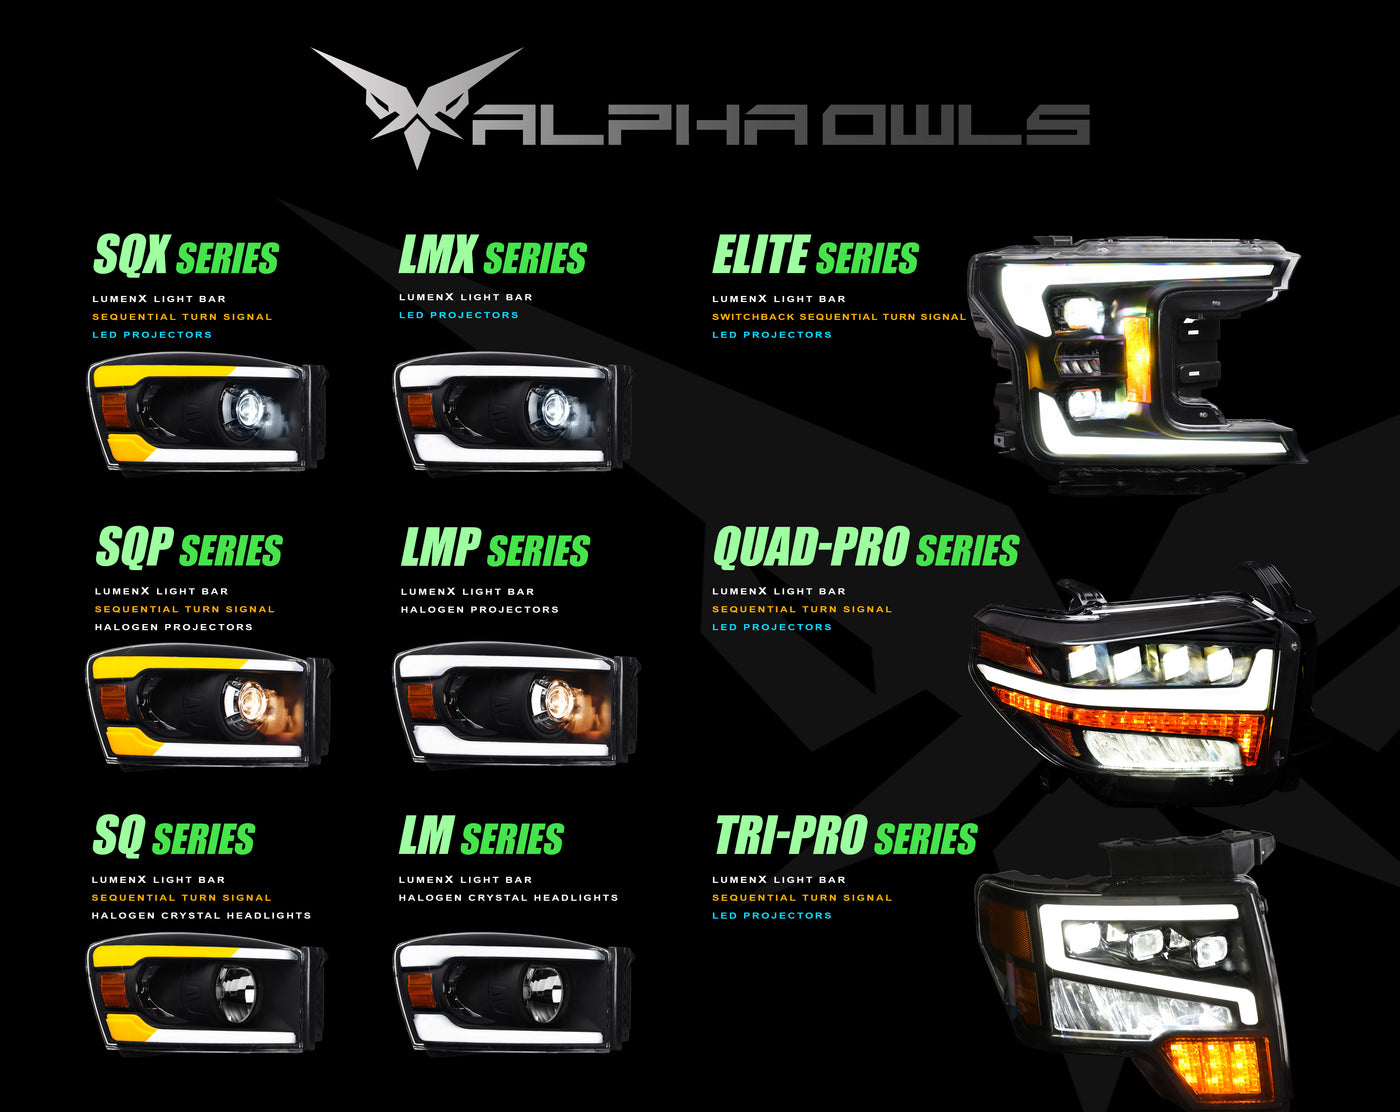 Alpha Owls Headlights, Chevy Headlights, K-2500 Headlights, Chrome Headlights, Headlights